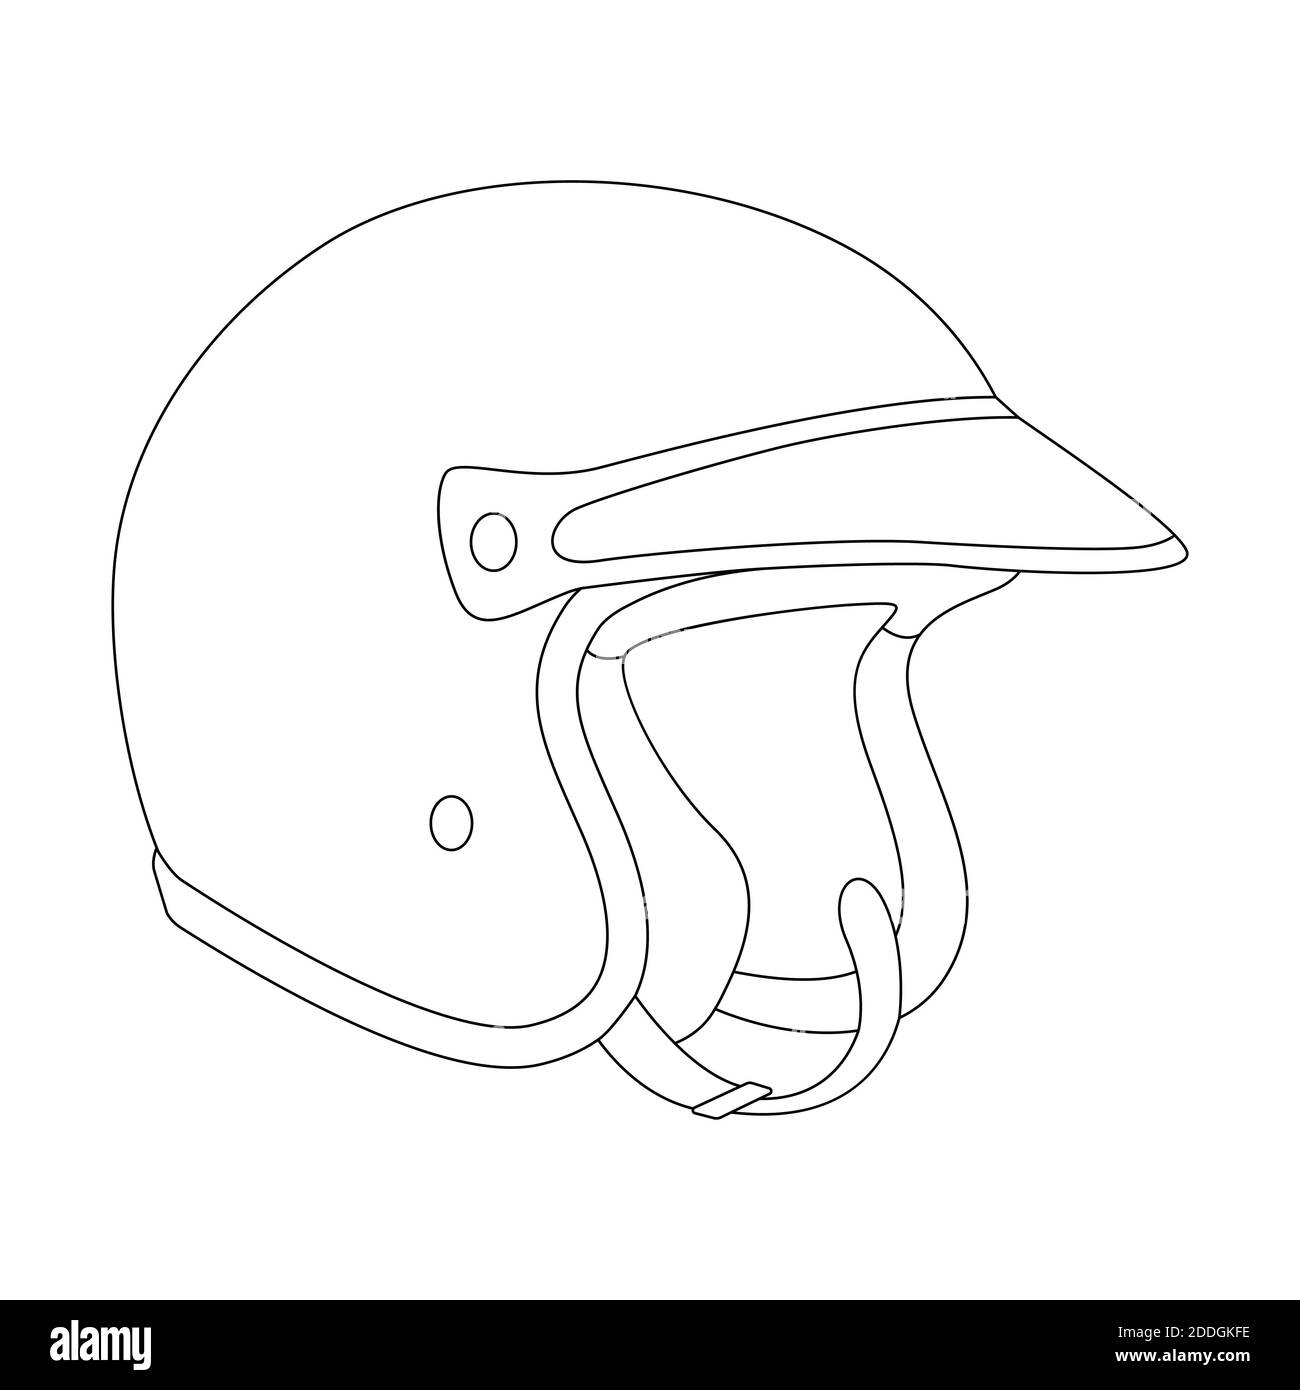 Helmet Vector, Dirty Bike, Dirty Bike Helmet, Helmet Sketch PNG and Vector  with Transparent Background for Free Download